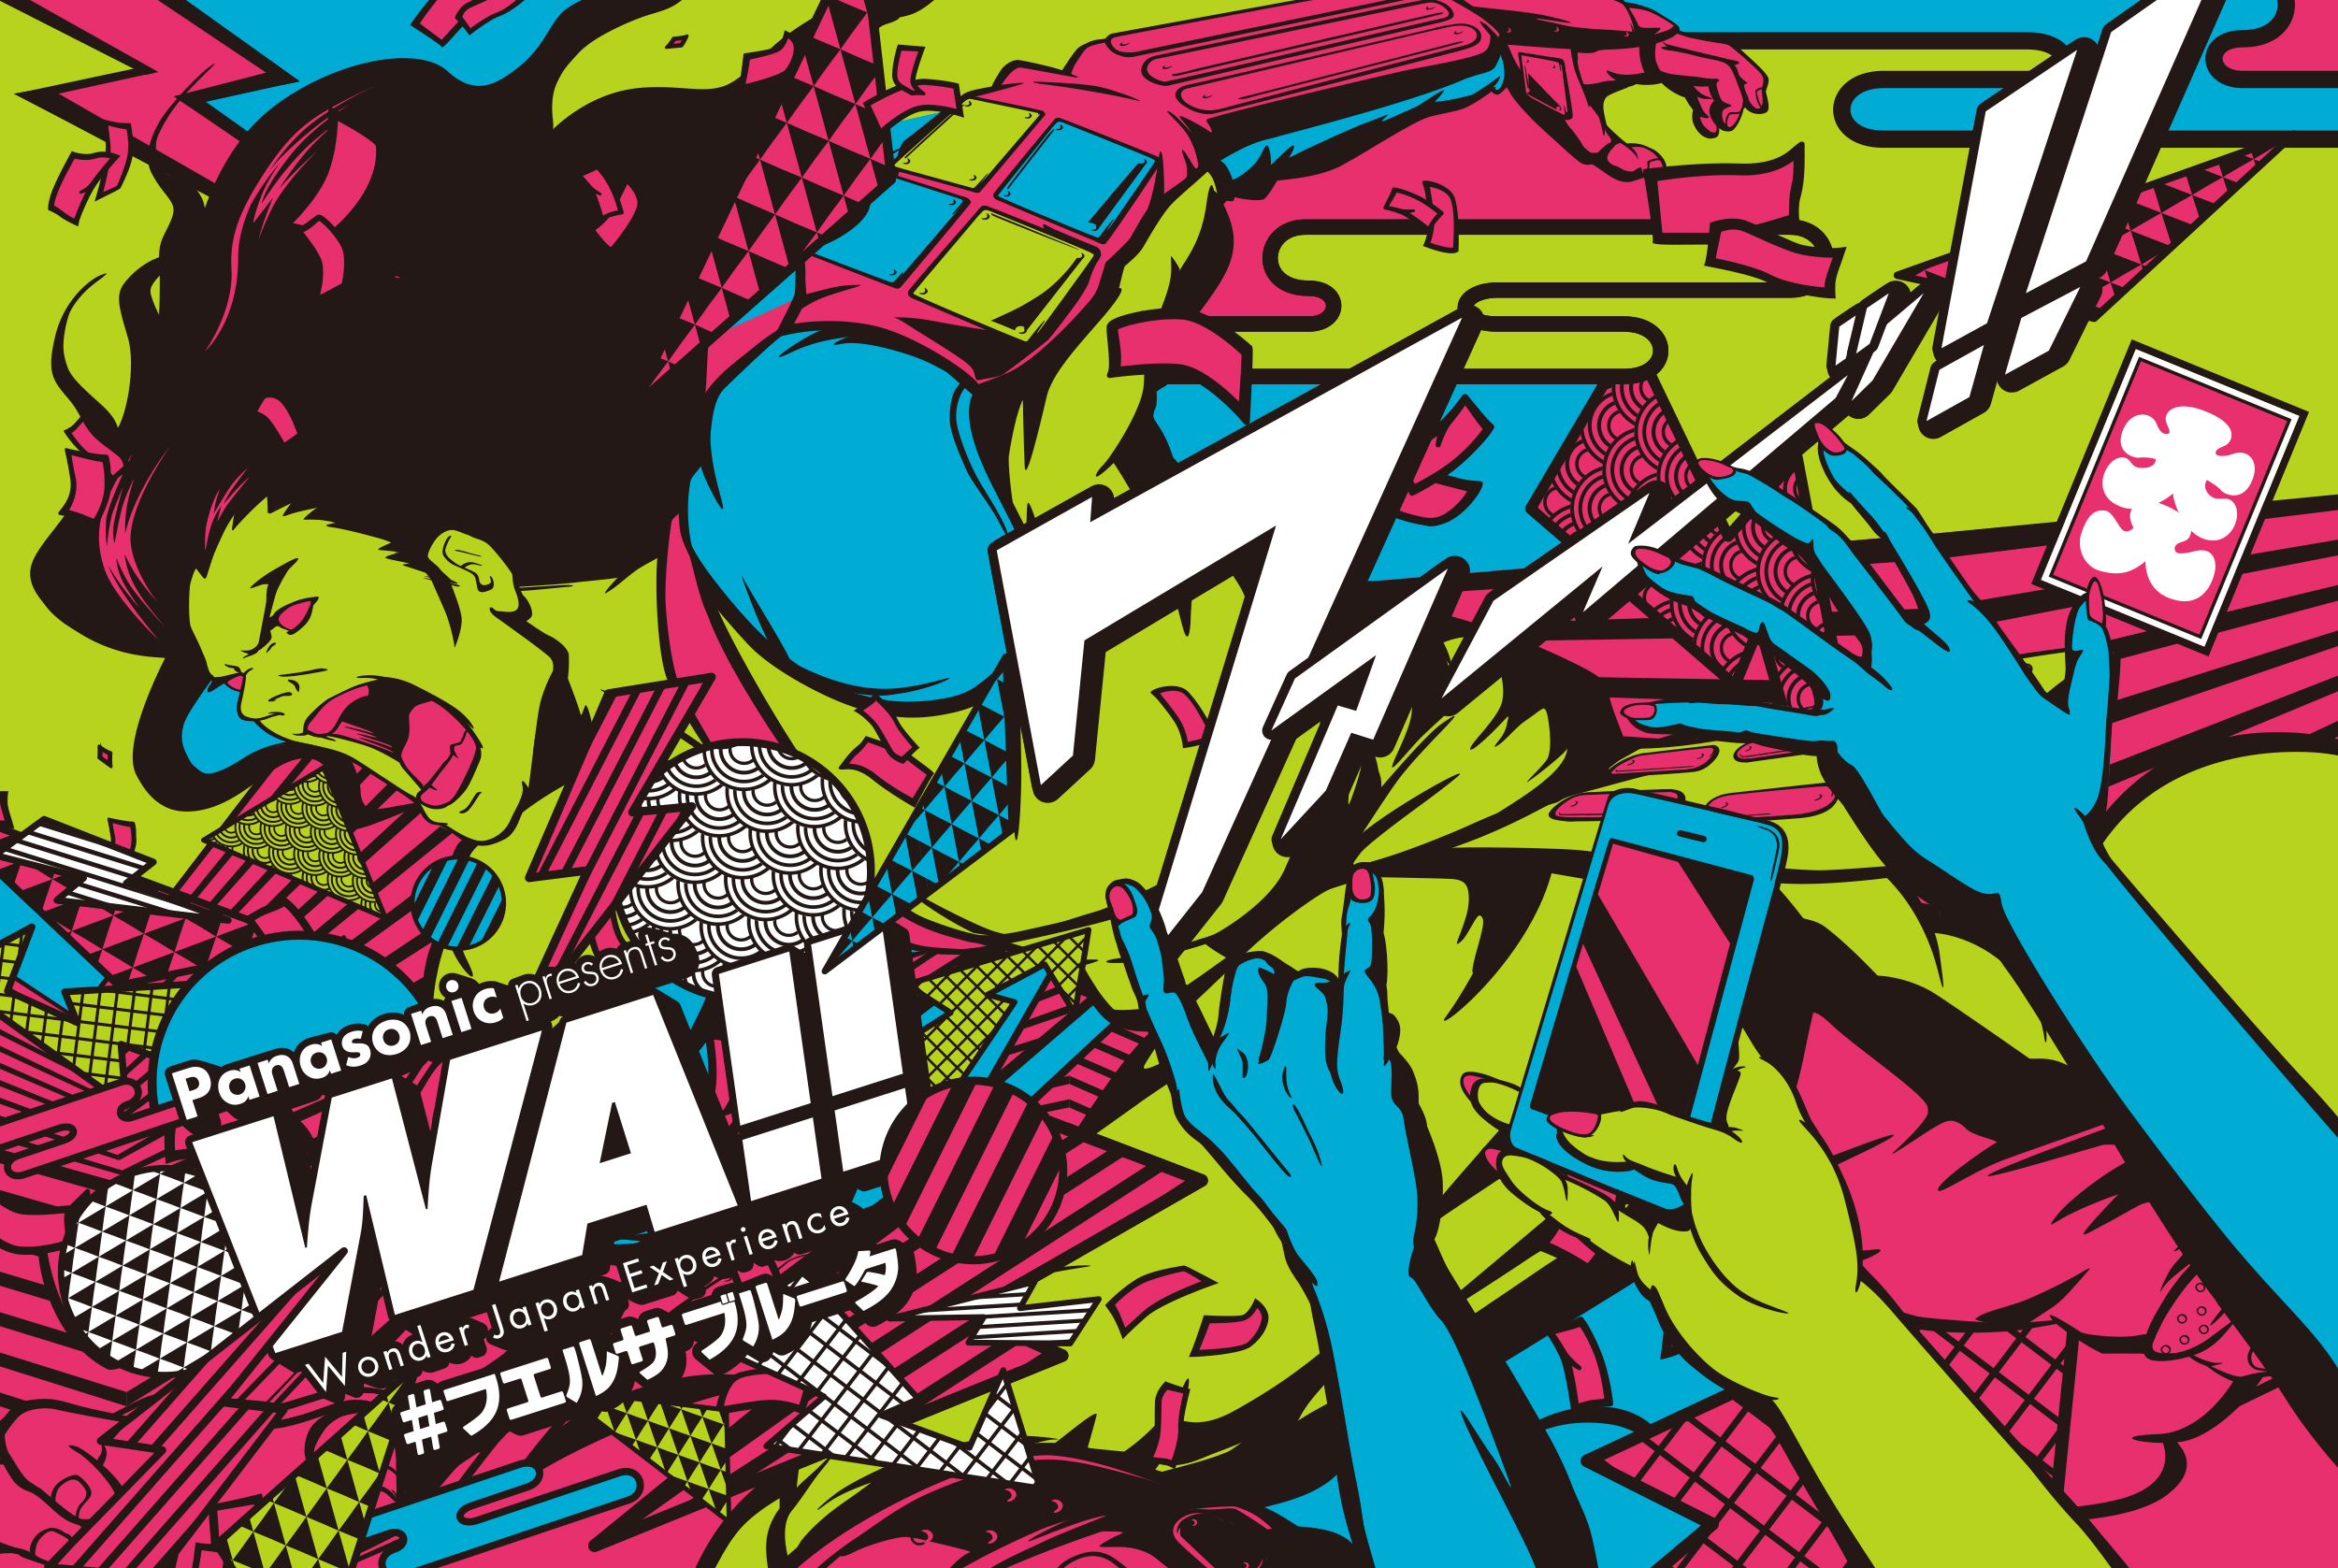 FUERZA BRUTA「Panasonic presents WA !! - Wonder Japan Experience」 BEYOND THE NEXT LEVEL